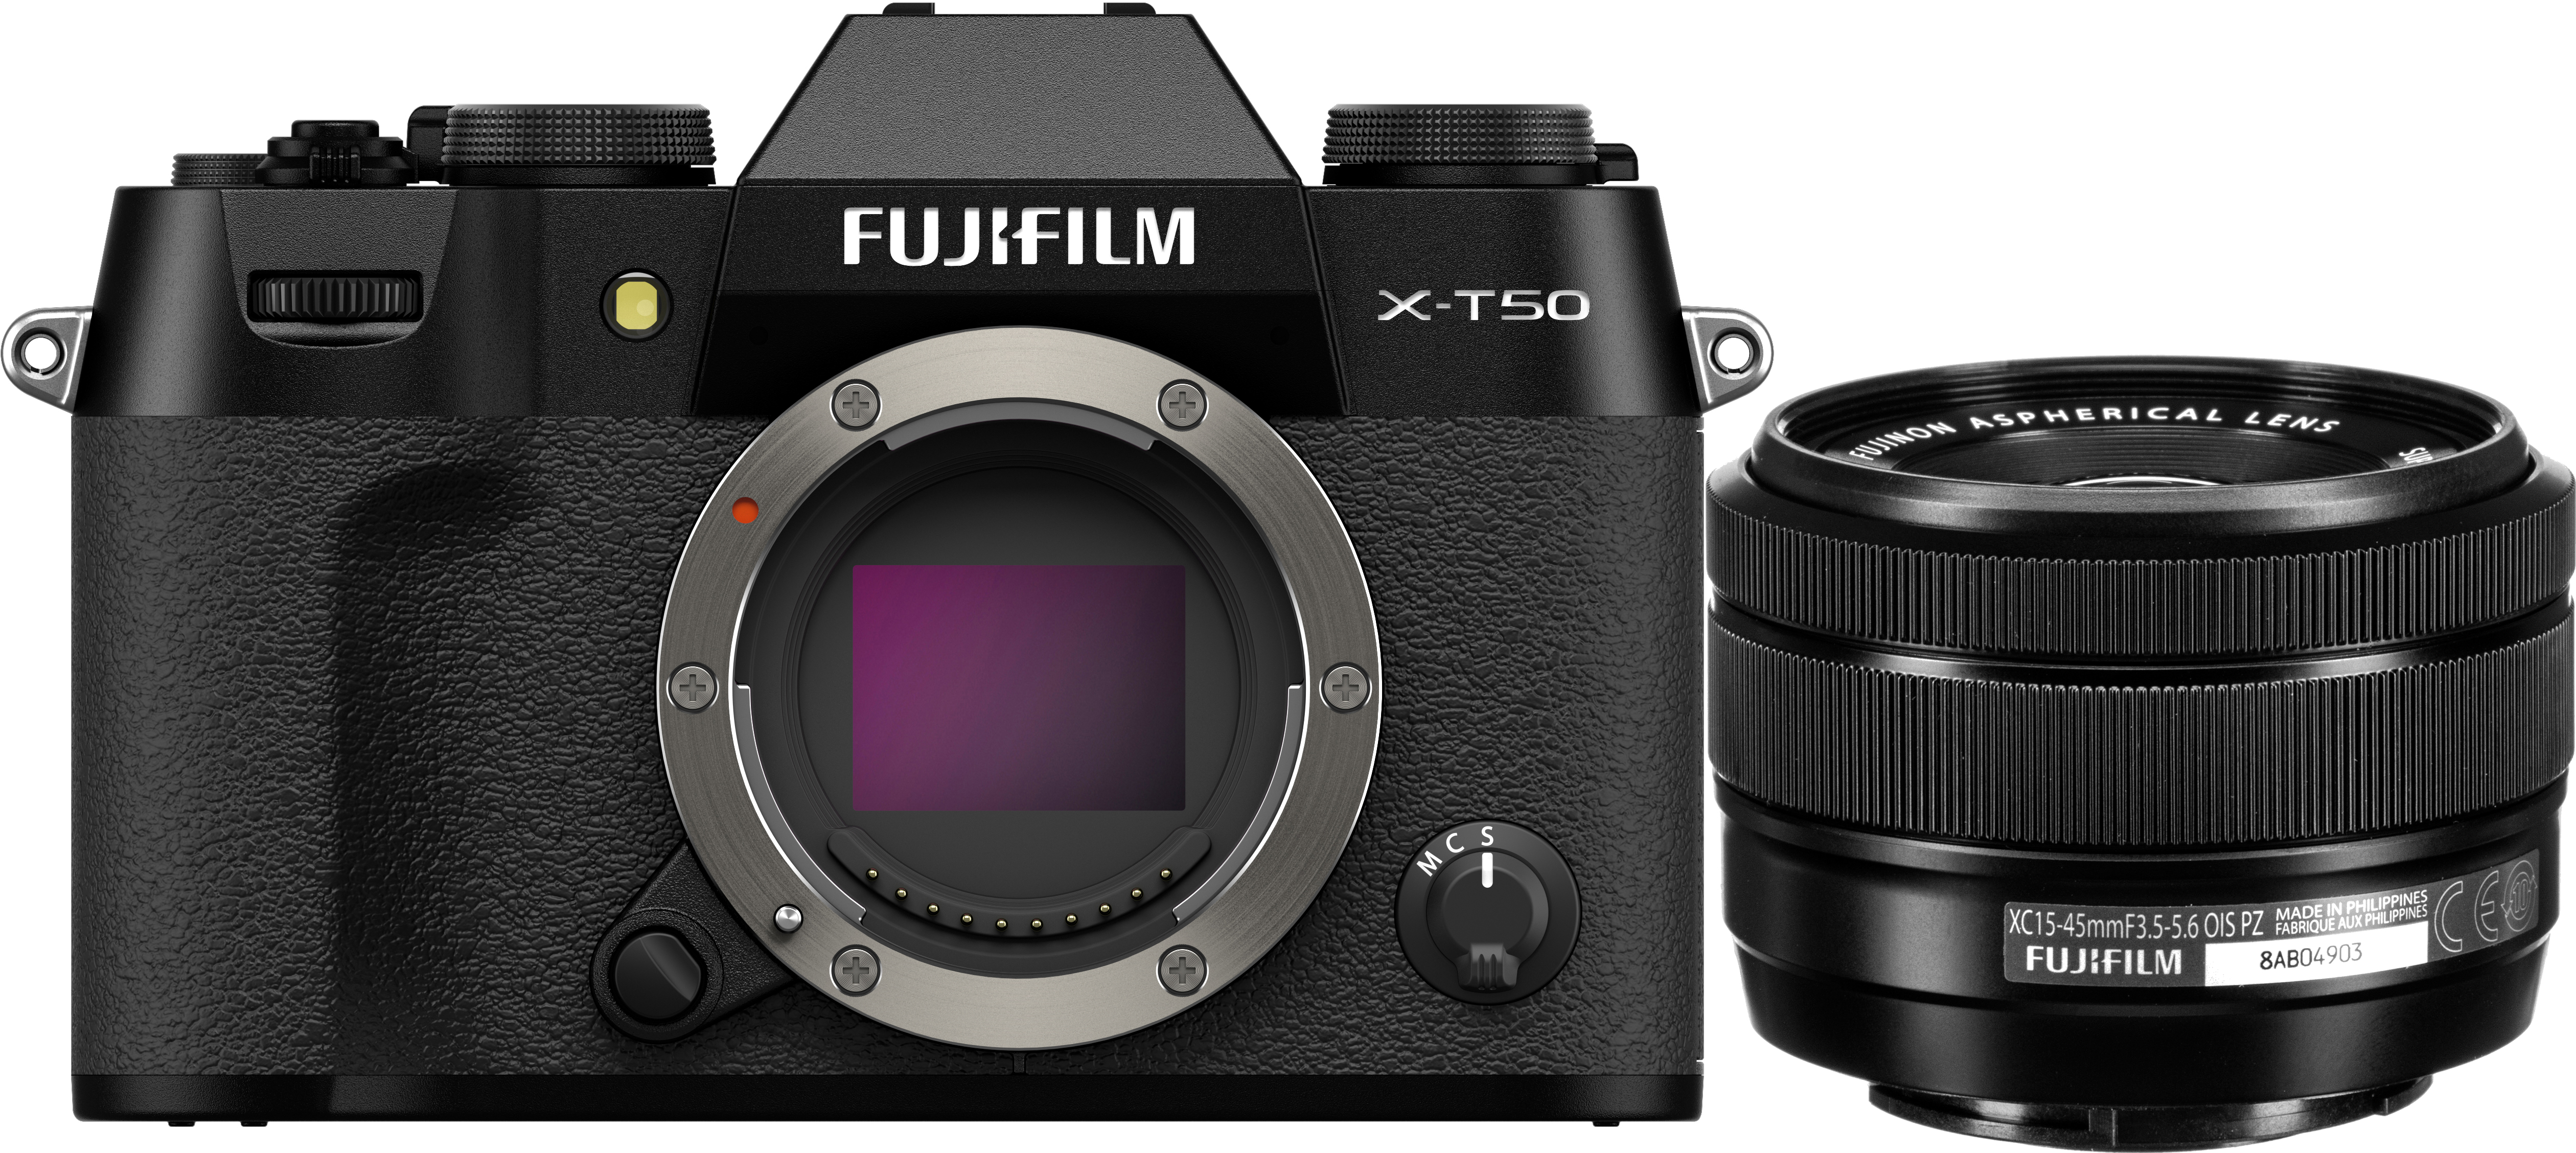 Fujifilm X-T50 Mirrorless Camera with 15-45mm f/3.5-5.6 Lens (Black)